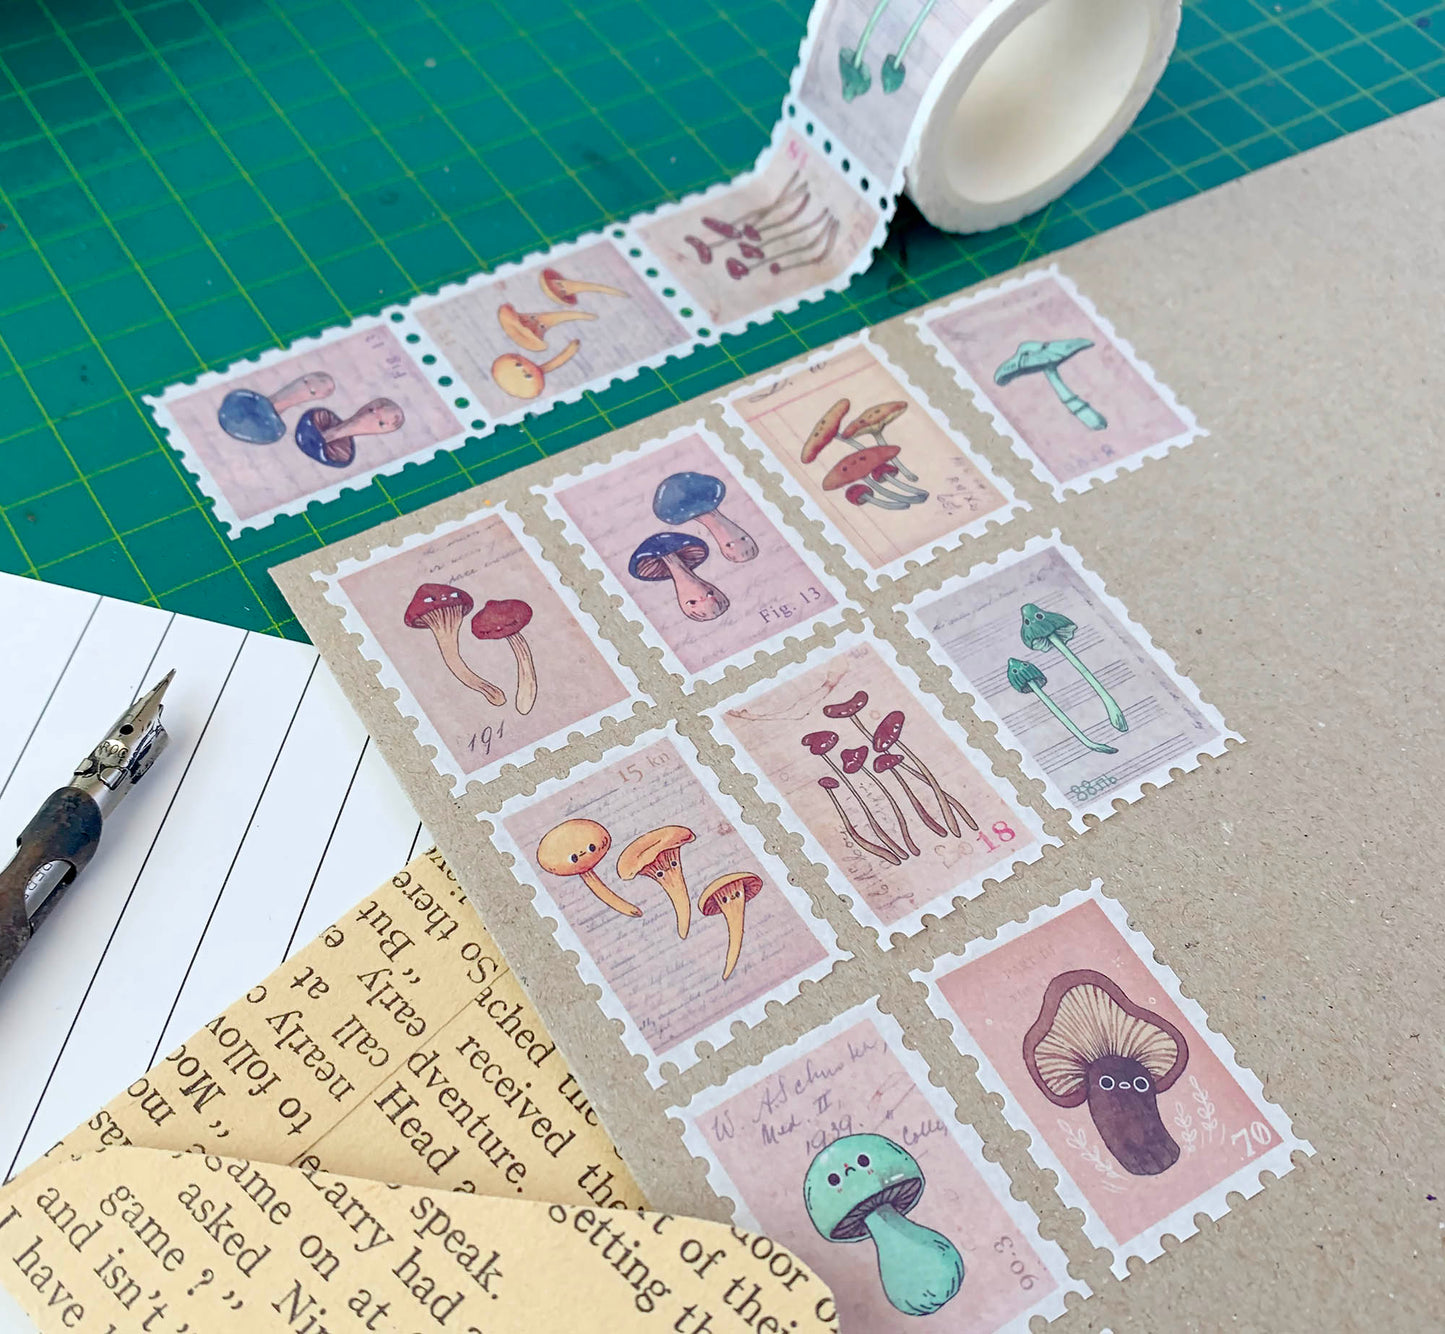 Vintage Mushroom Volume I - Stamp Washi Tape